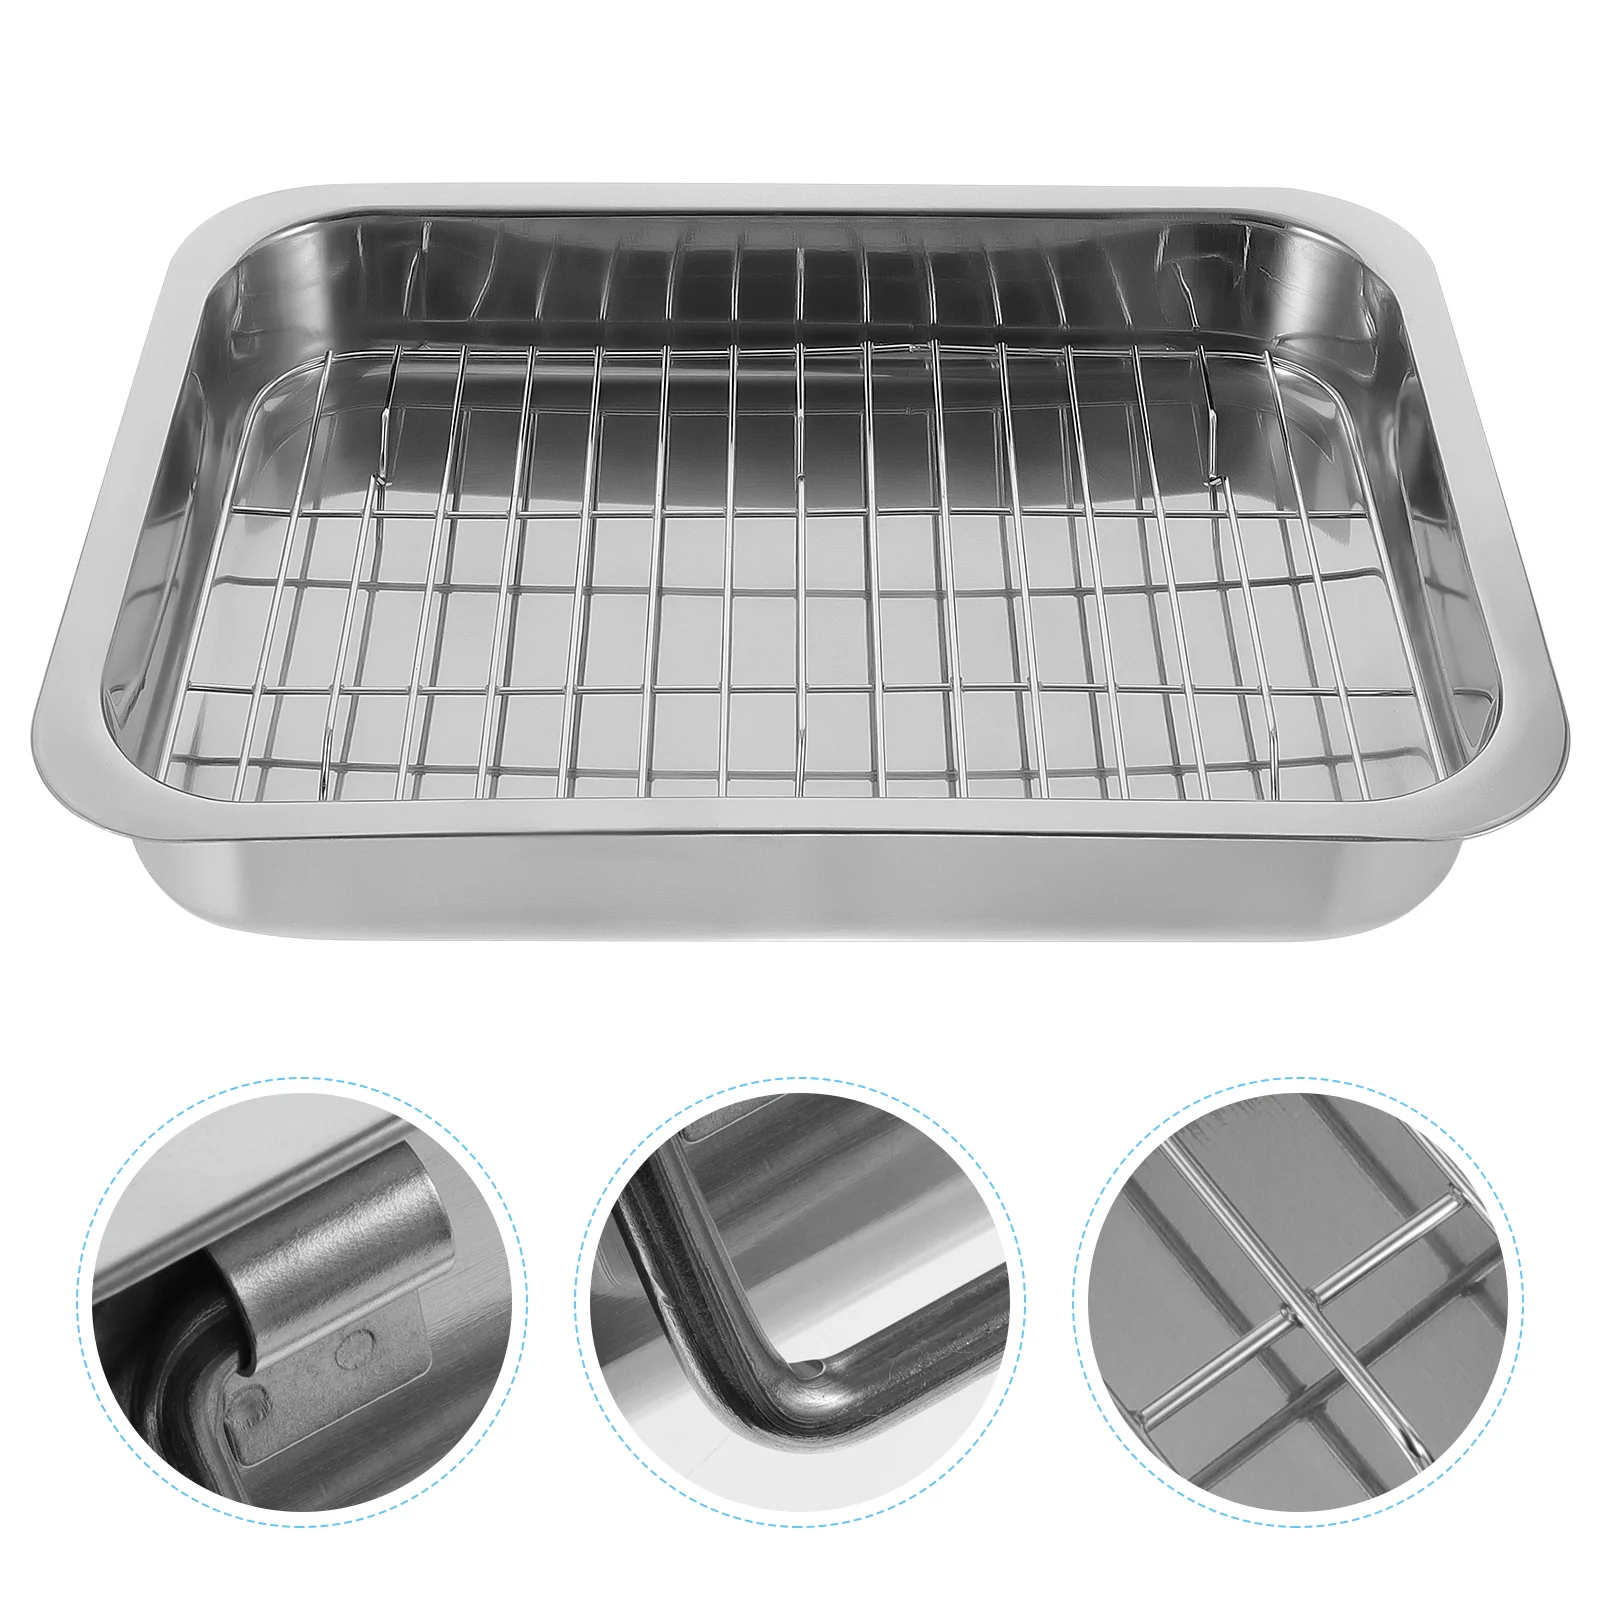 https://ae01.alicdn.com/kf/Sb88a691d66ea46f4bcf798ca2c18c05bD/Baking-Pan-Rack-Tray-Sheet-Roasting-Steel-Oven-Cookie-Stainless-Cooling-Set-Toaster-Pans-Sheets-Cake.jpg